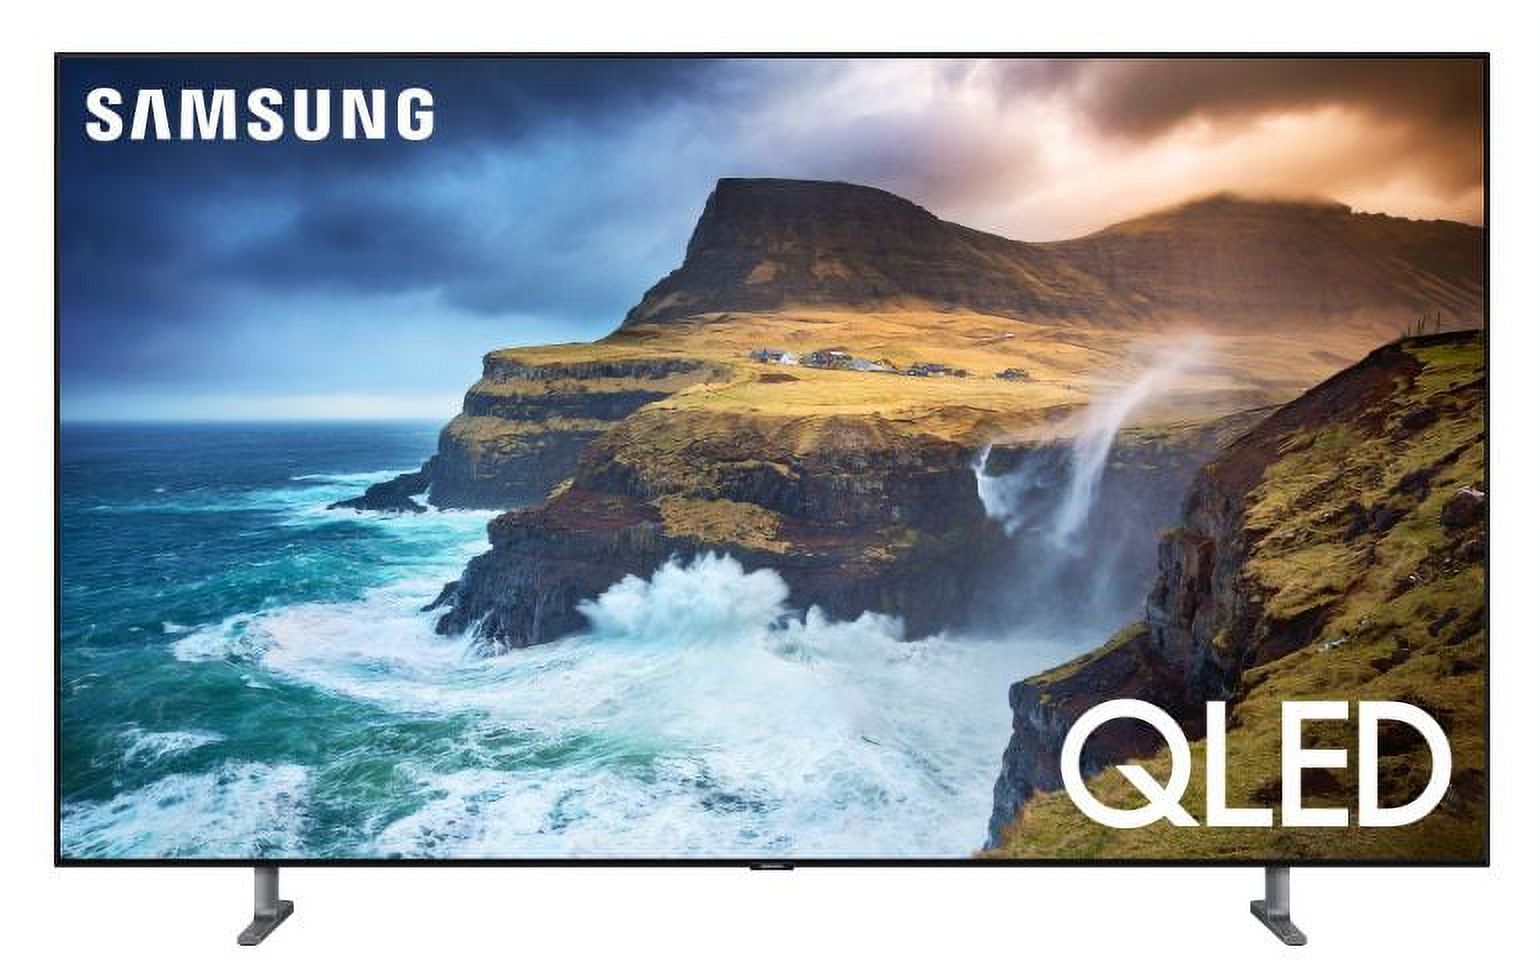 SAMSUNG 49" Class 4K Ultra HD (2160P) HDR Smart QLED TV QN49Q70R (2019 Model) - image 1 of 9